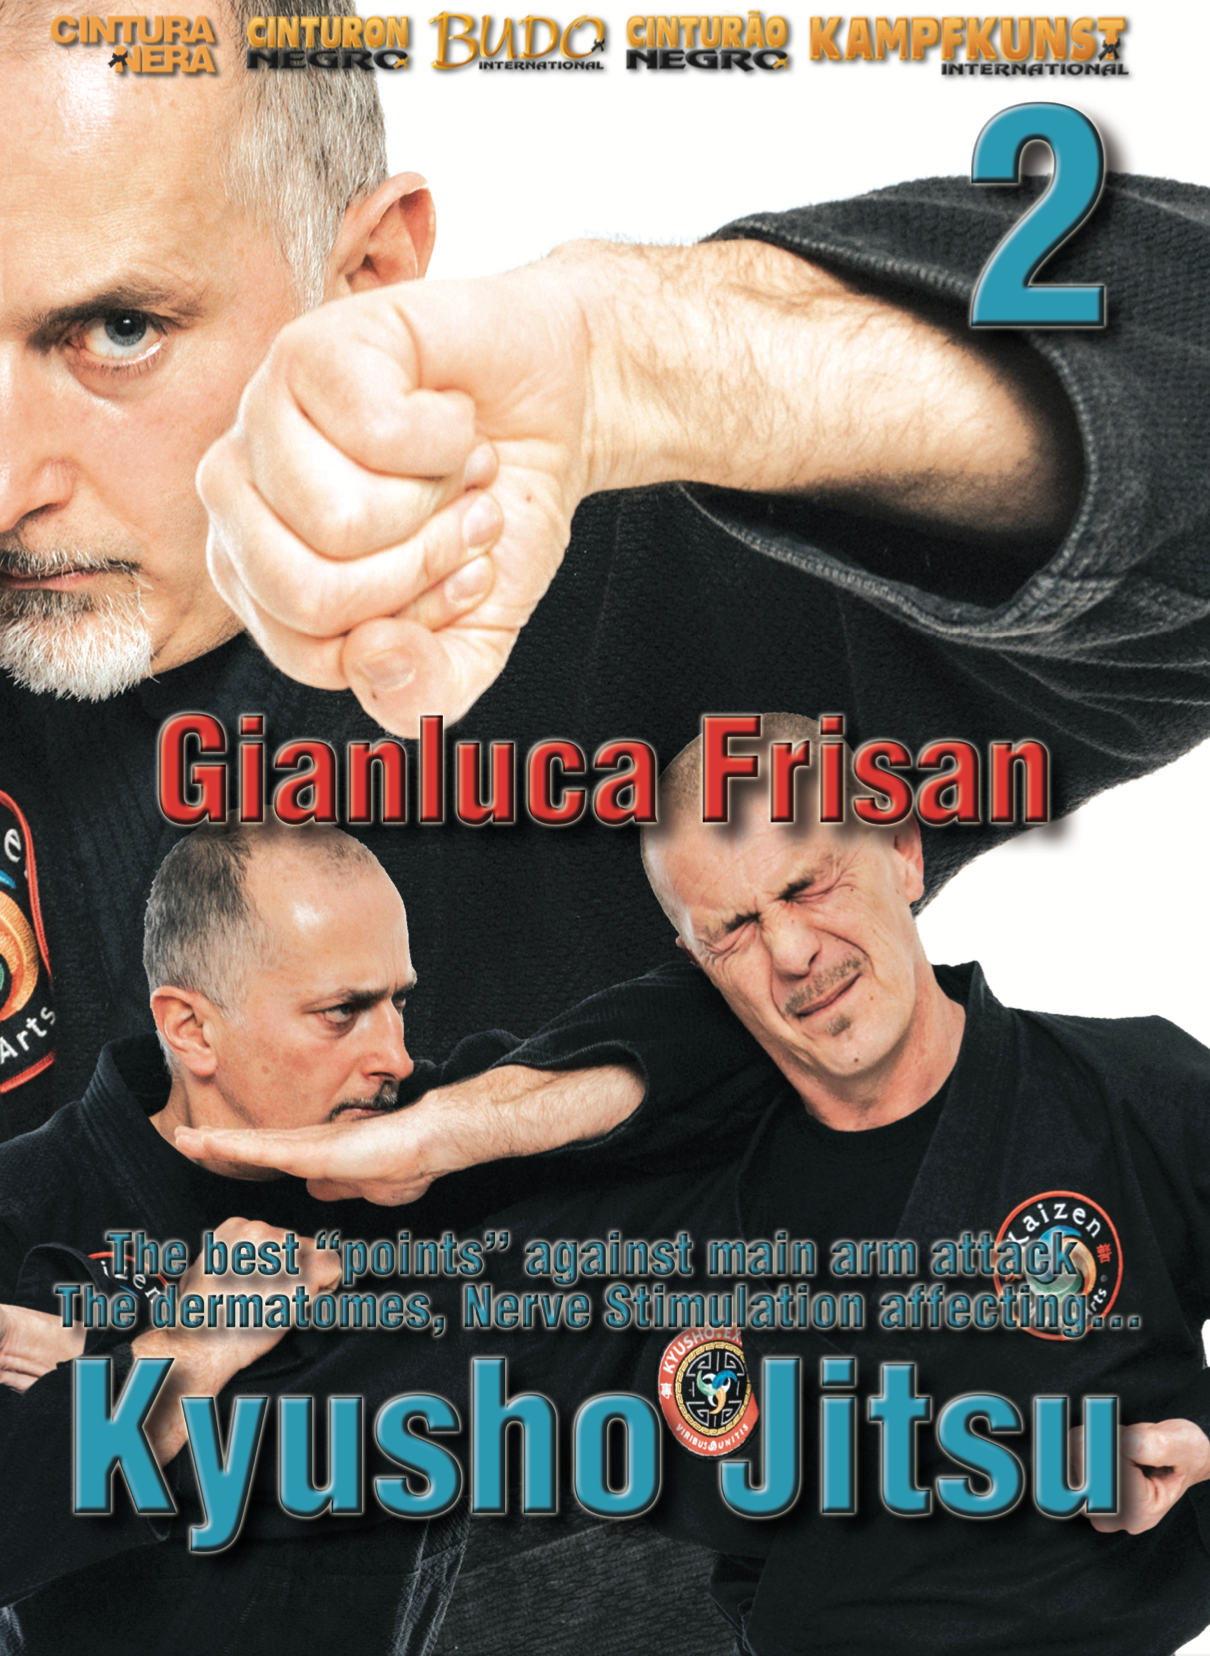 Mejor DVD 2 de estimulación nerviosa y ataques de brazos de Kyusho Jitsu con Gianluca Frisan 